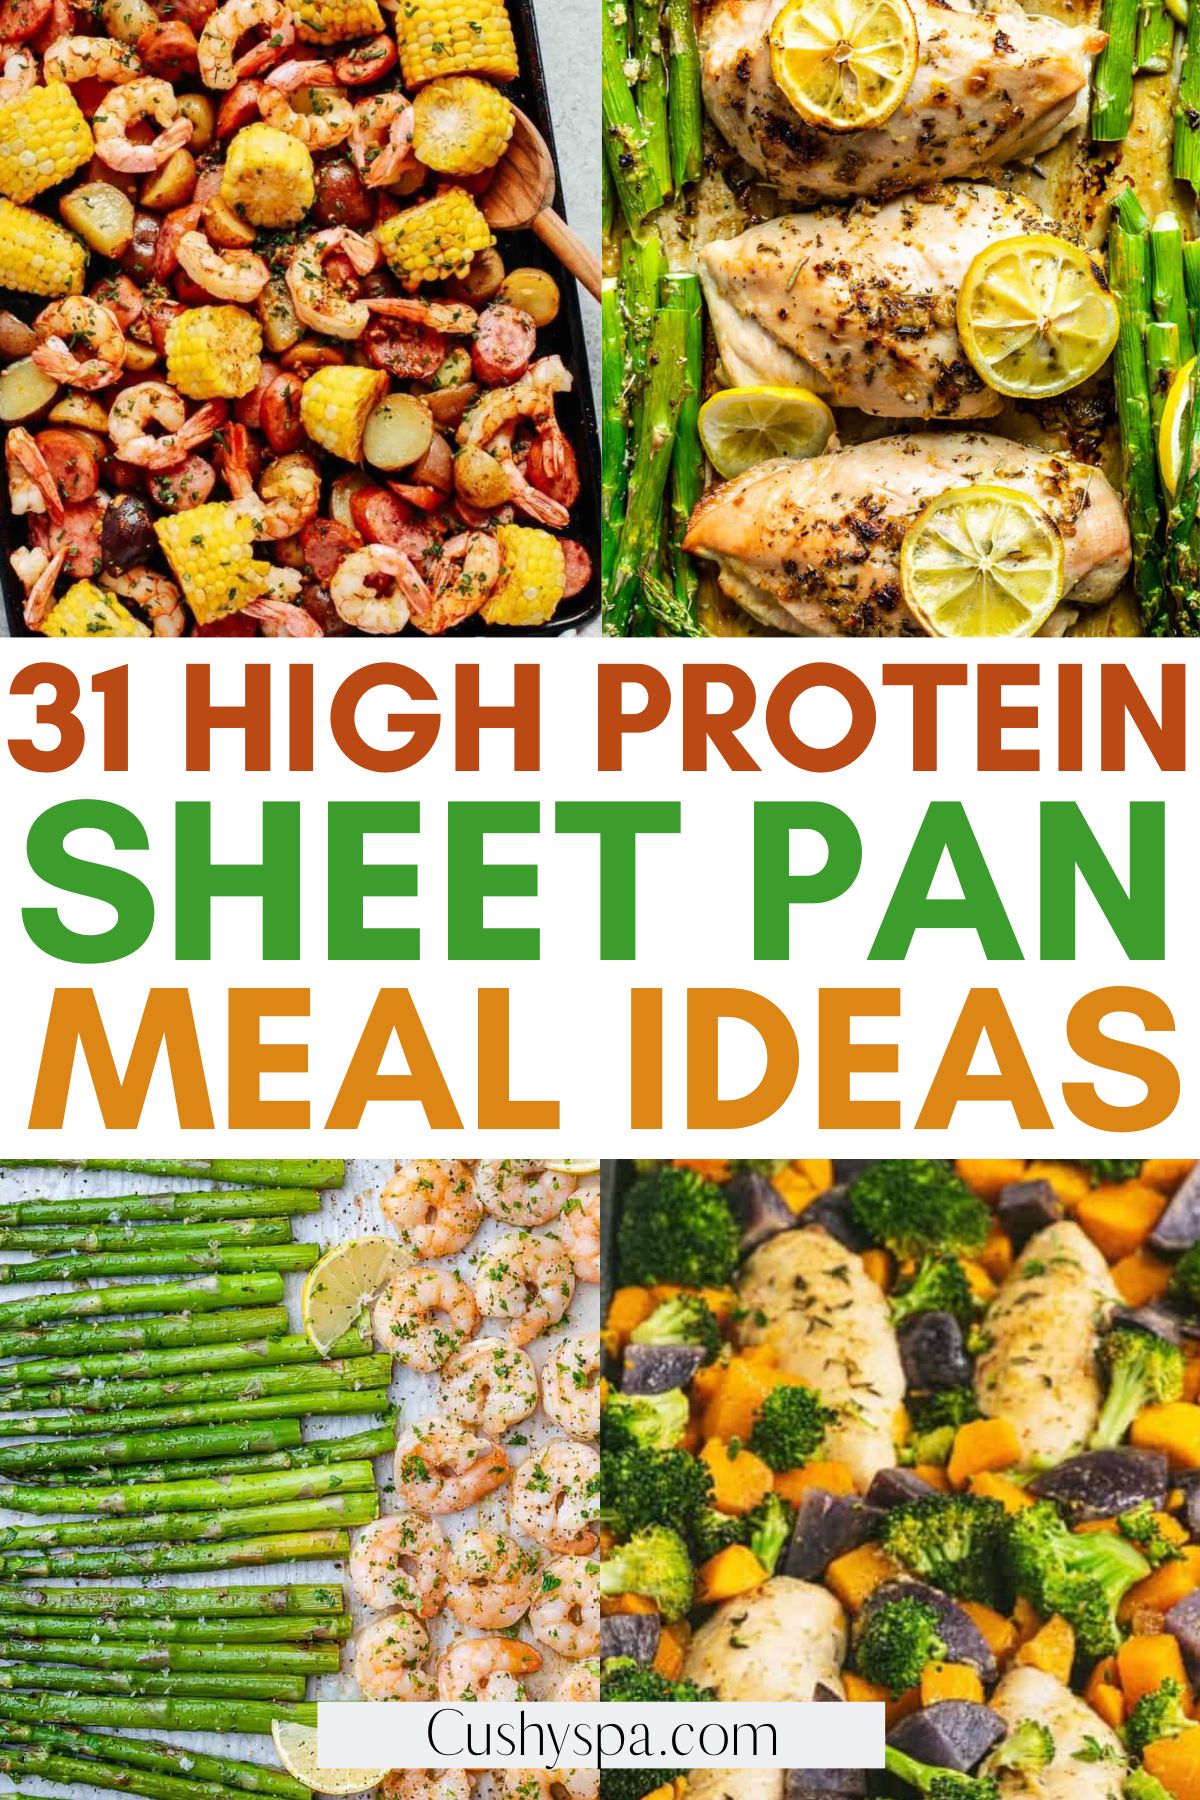 High Protein Sheet Pan Meal Ideas